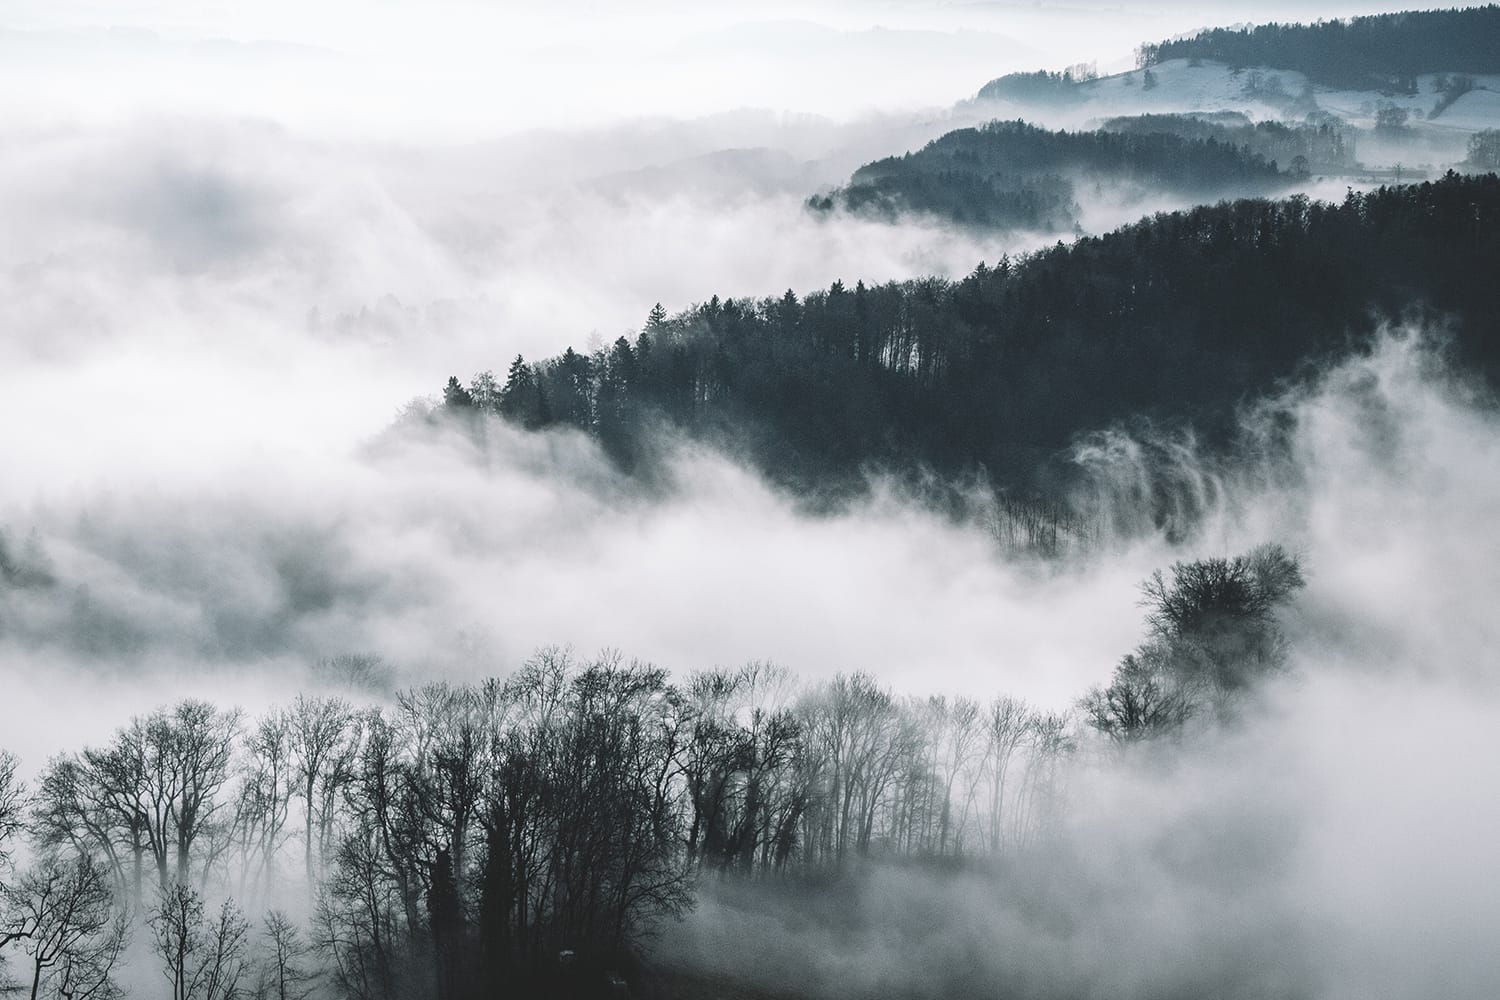 Capturing Amazing Photos of Mist and Fog